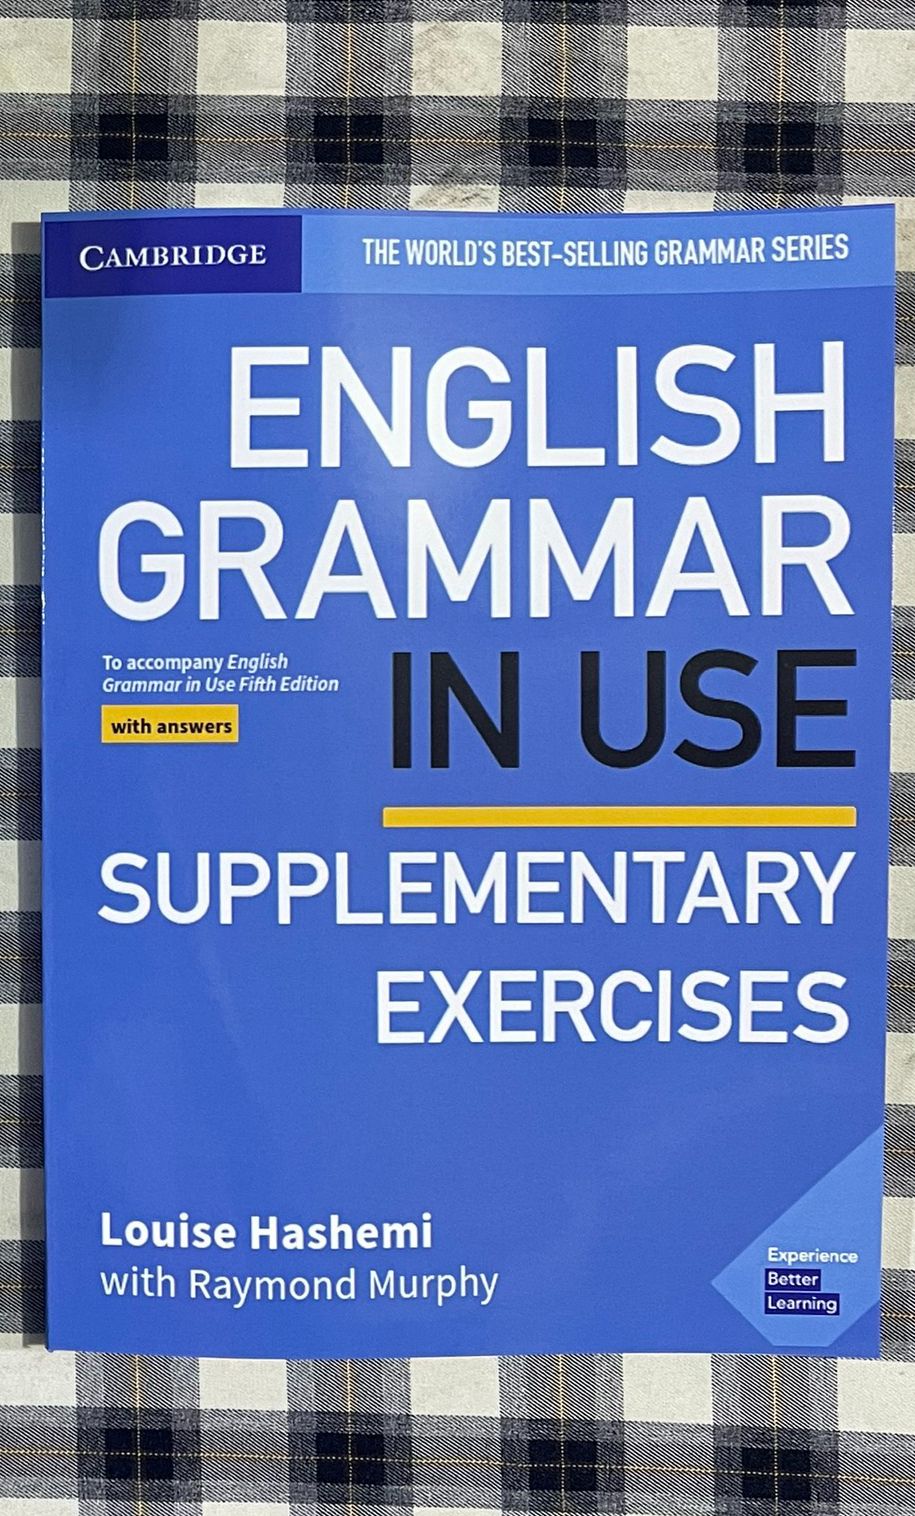 English Grammar in Use 5th edi - Exercises